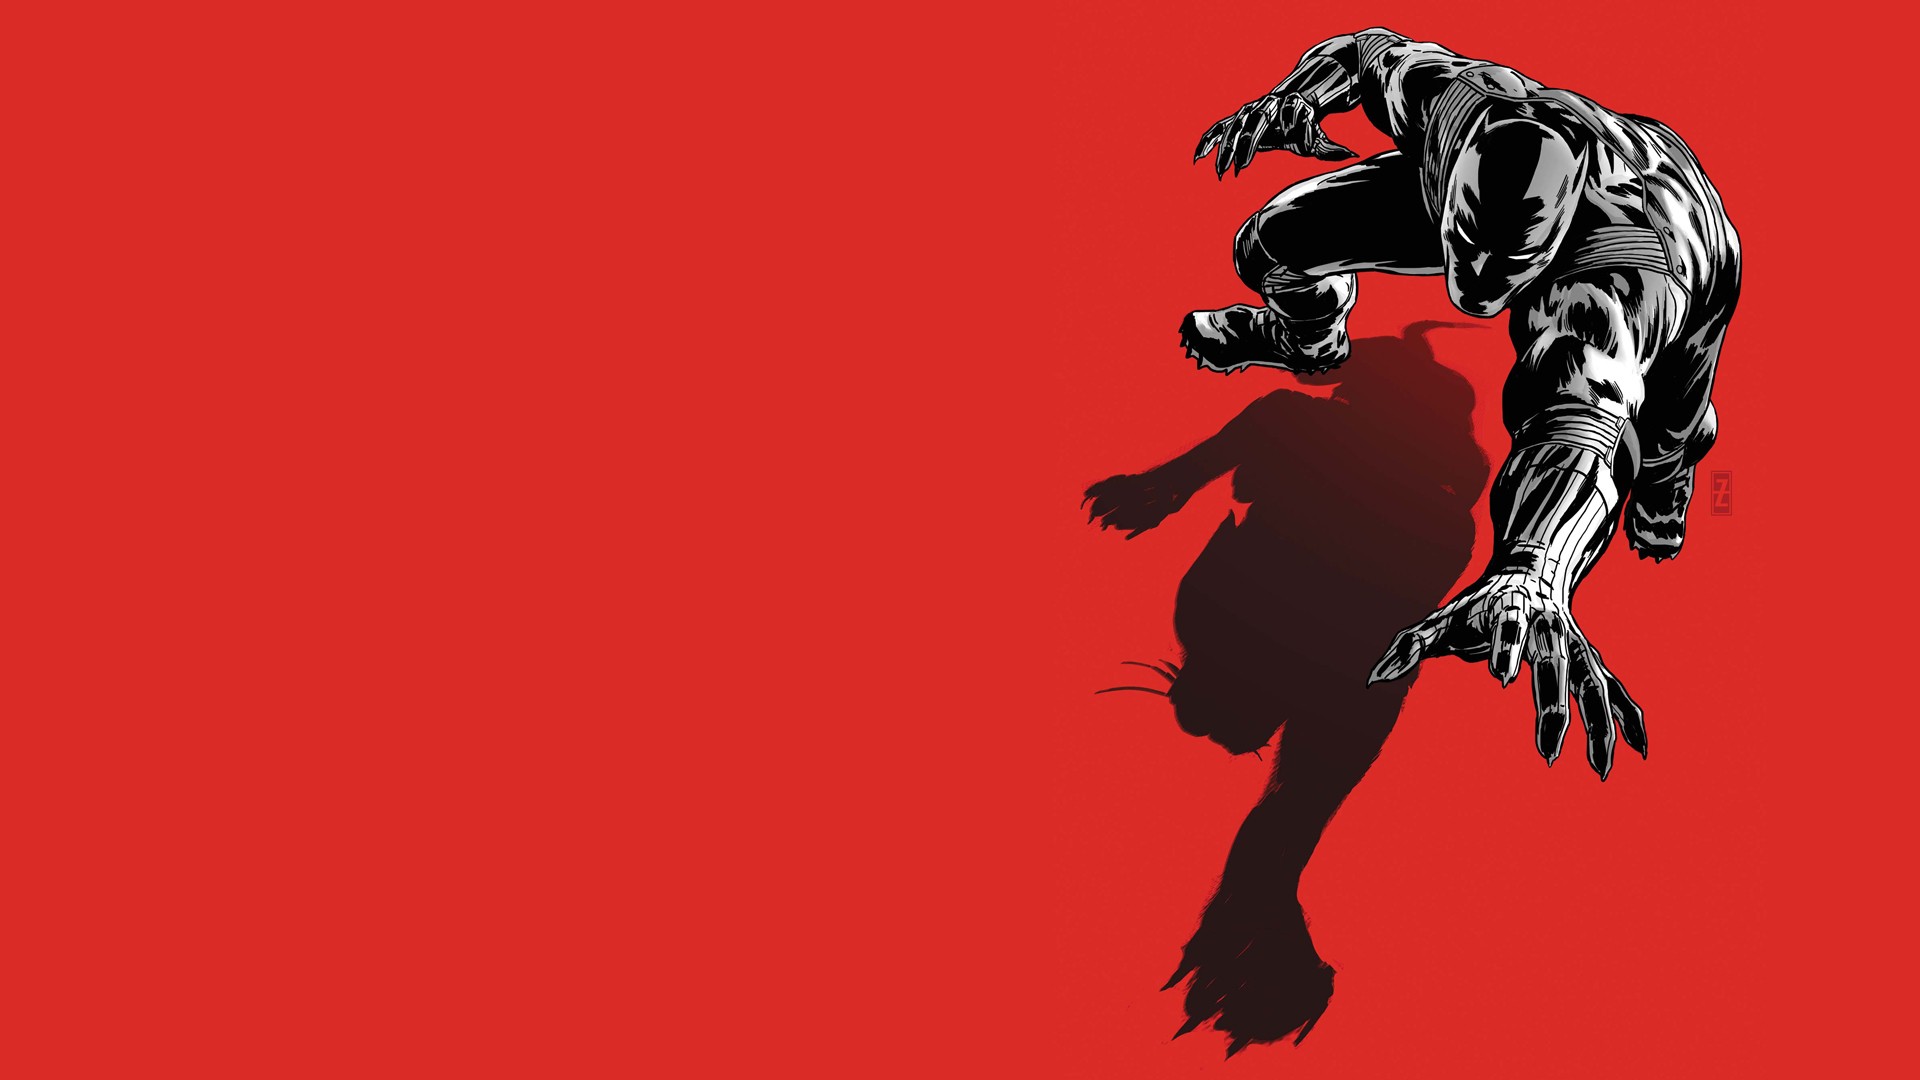 Black Panther Marvel iPhone Wallpaper - WallpaperSafari